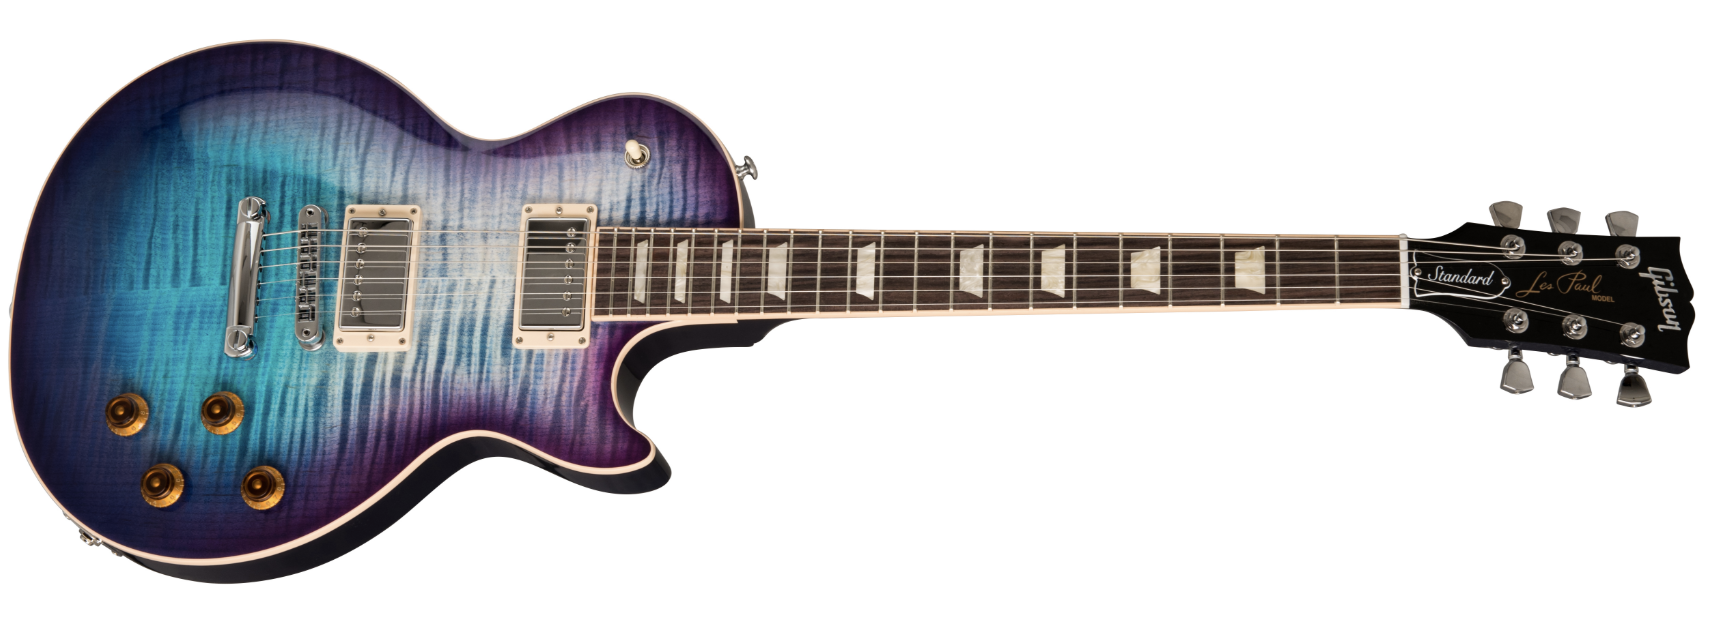 Gibson USA 2019 Les Paul Standard, Blueberry Burst